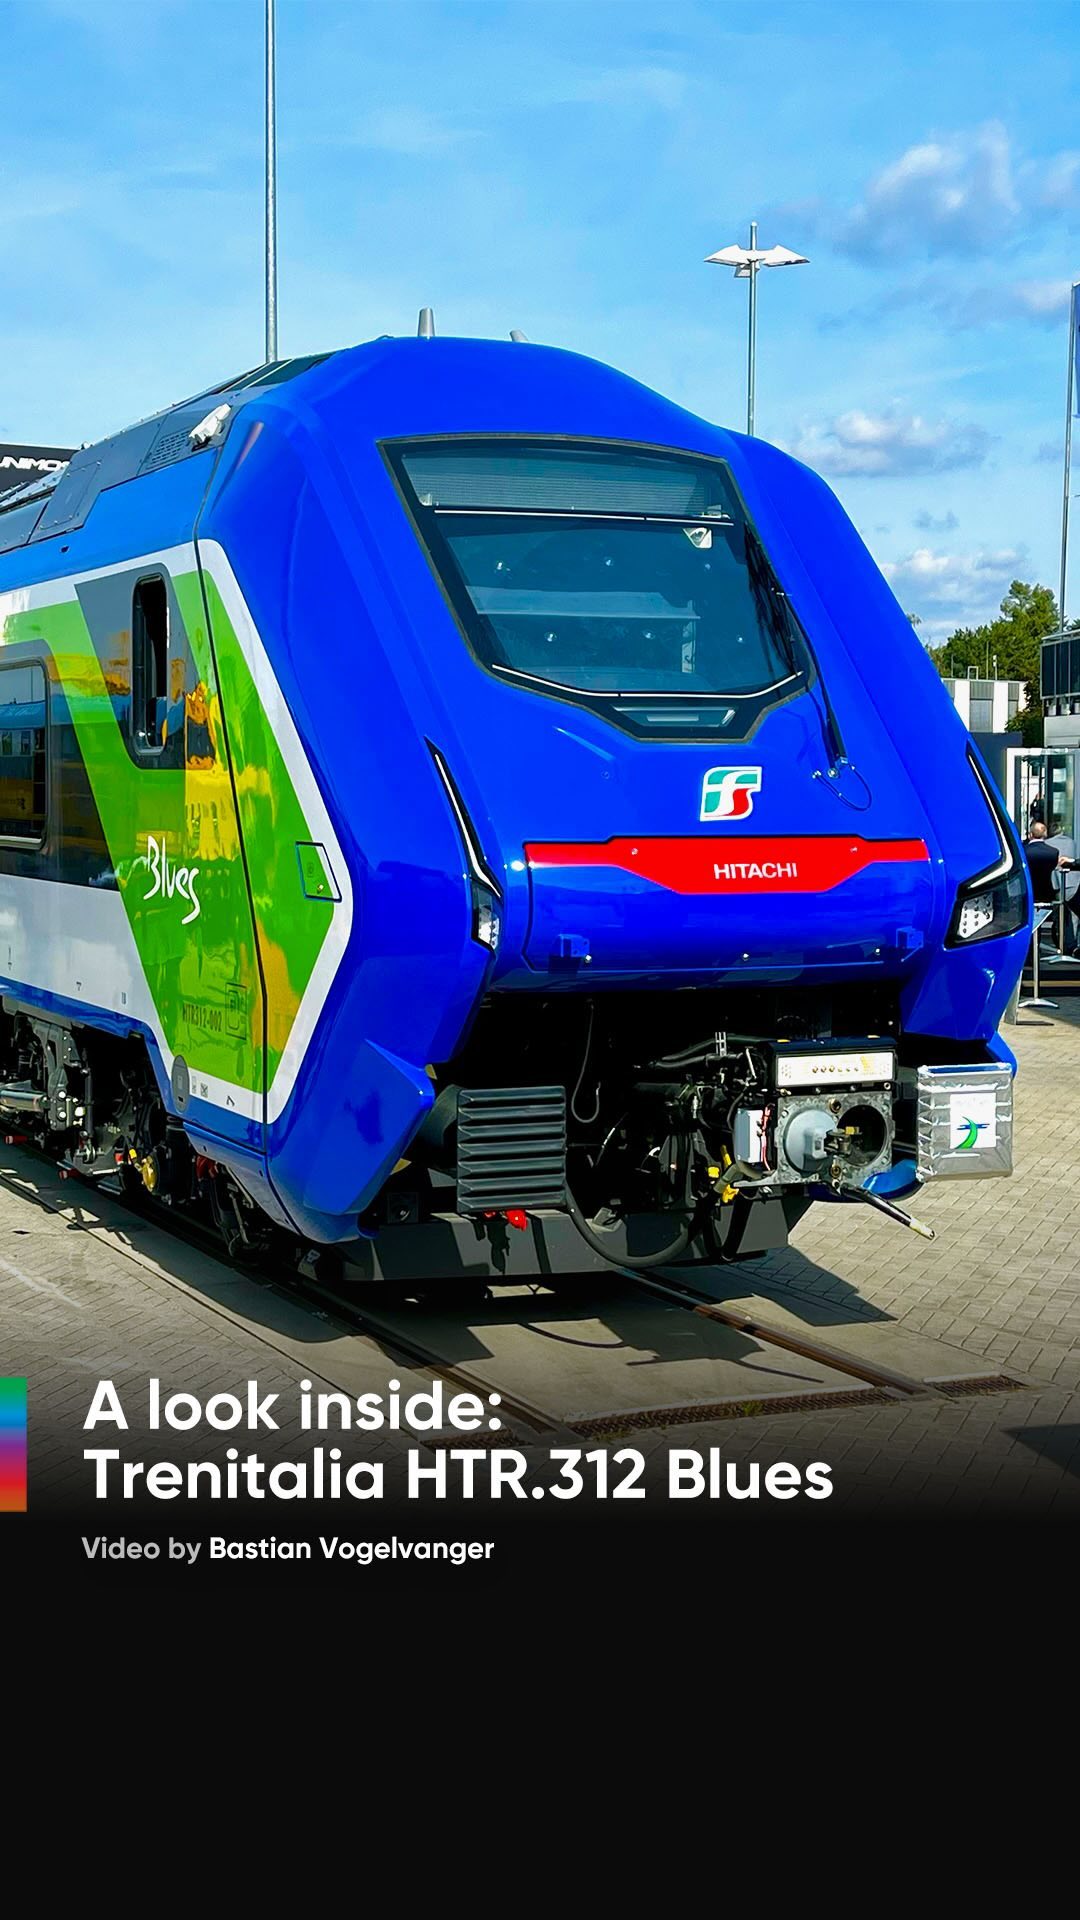 A look inside: Trenitalia’s HTR.312 nicknamed ‘blues’ 🇮🇹 What do you think of the overall design? Comment down below! 
.
.
.
.
#trenitalia #trenitaliablues #Hitachi #Hitachirailitaly #HTR312 #HTR412 #blues #Bimode #Bimodeunit #ferroviare #treni #fs #railways #railcolor #railcolornews #railways_of_our_world #railways_of_europe #Electricmultipleunit #trainreel #reel #reels #Innotrans #Innotrans2022 #italia